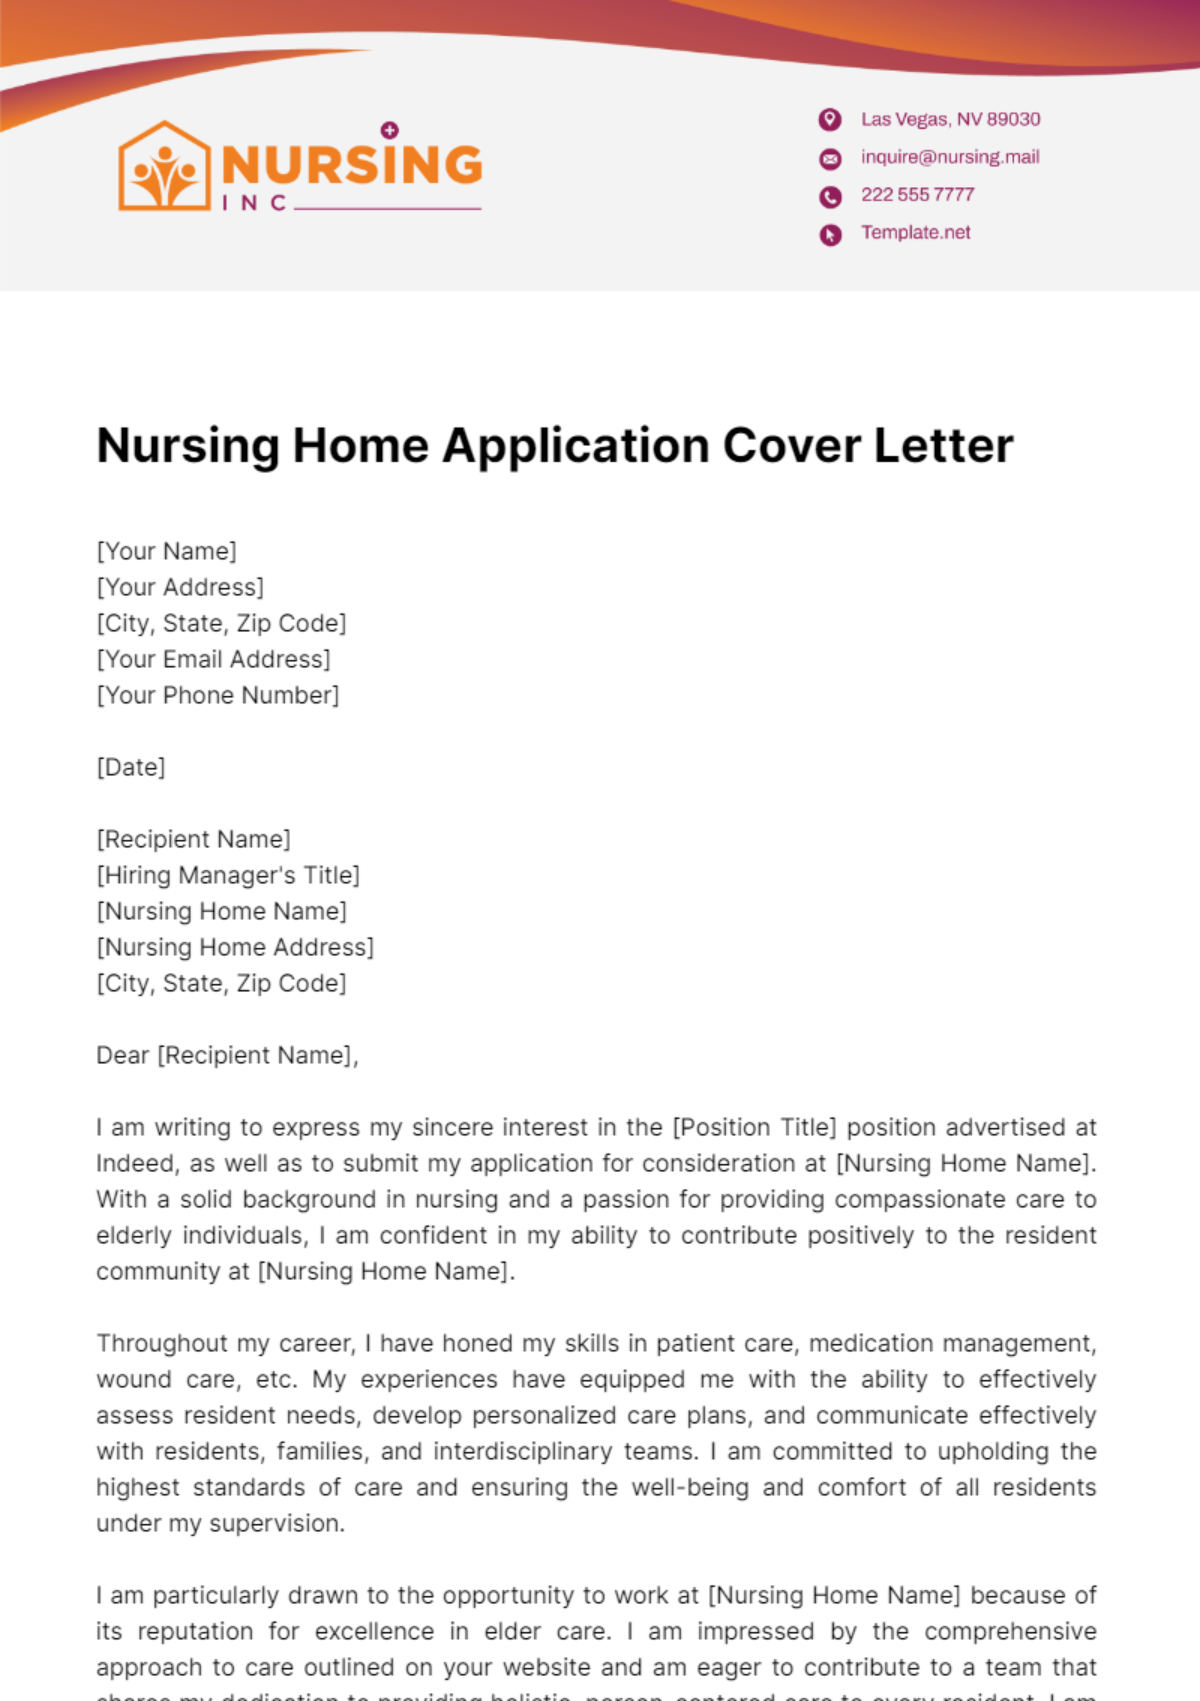 Nursing Home Application Cover Letter Template